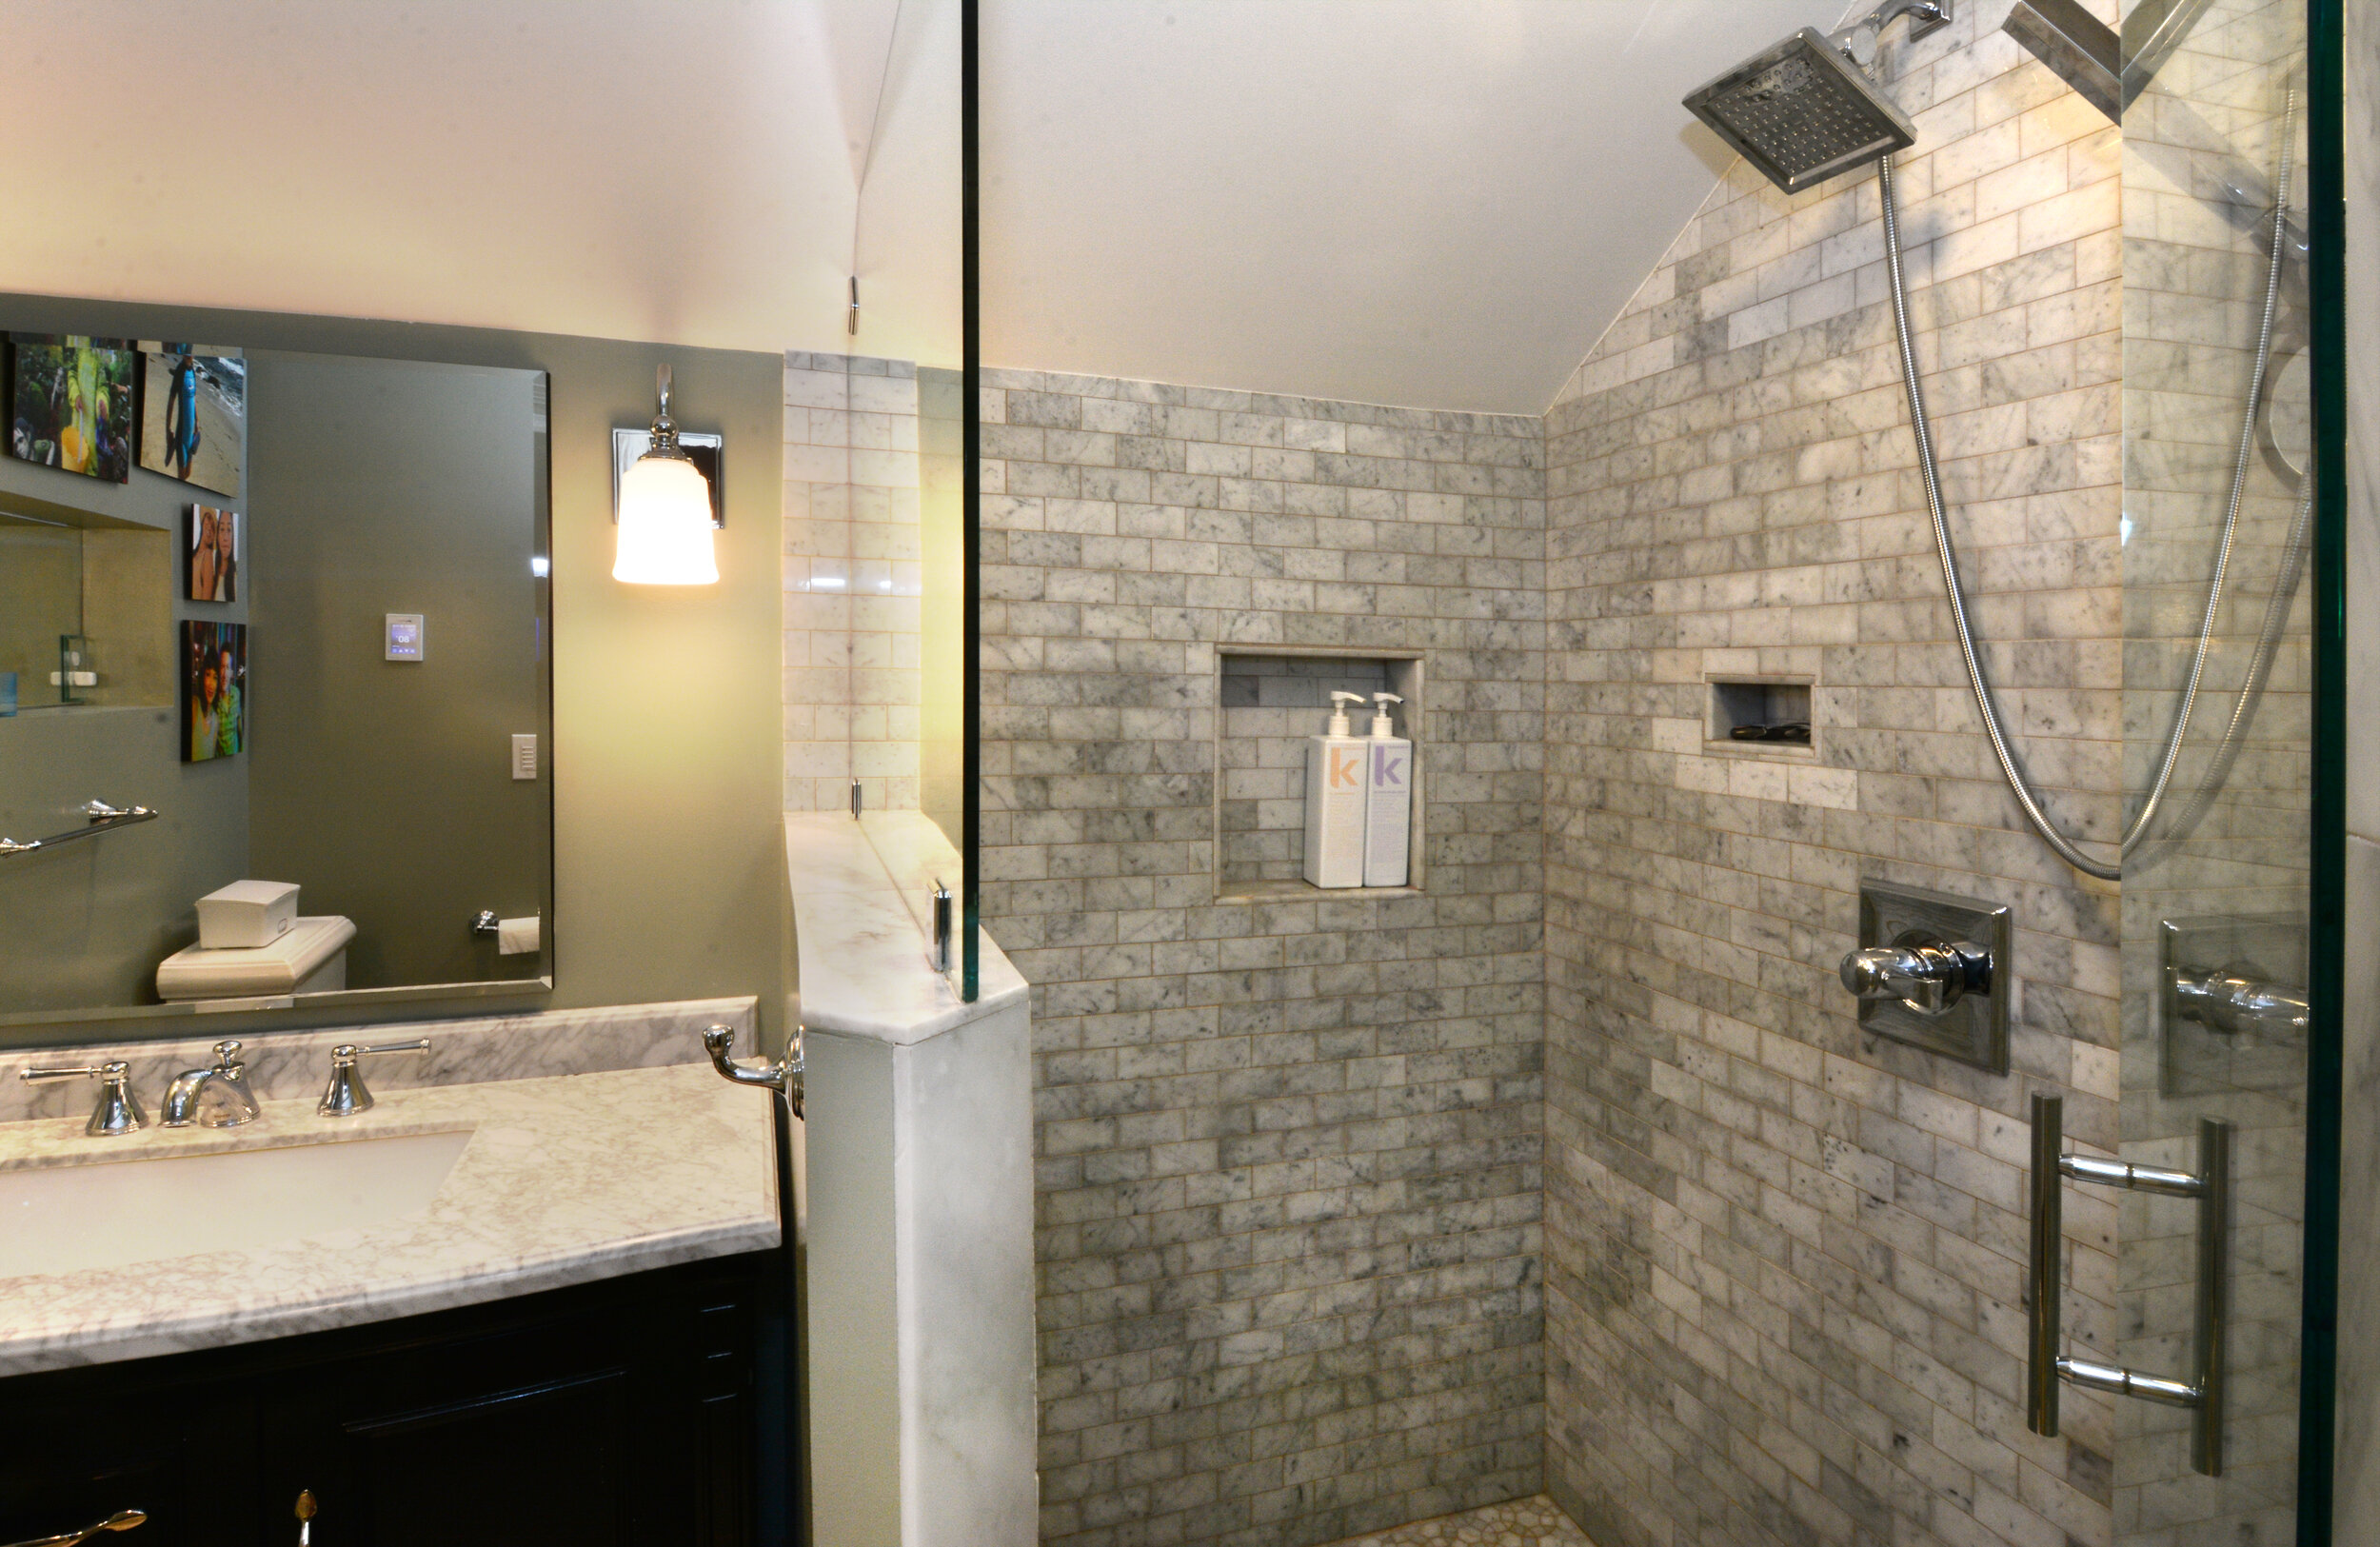 6 - Interior Carpentry Service - Bathroom Remodel.jpg